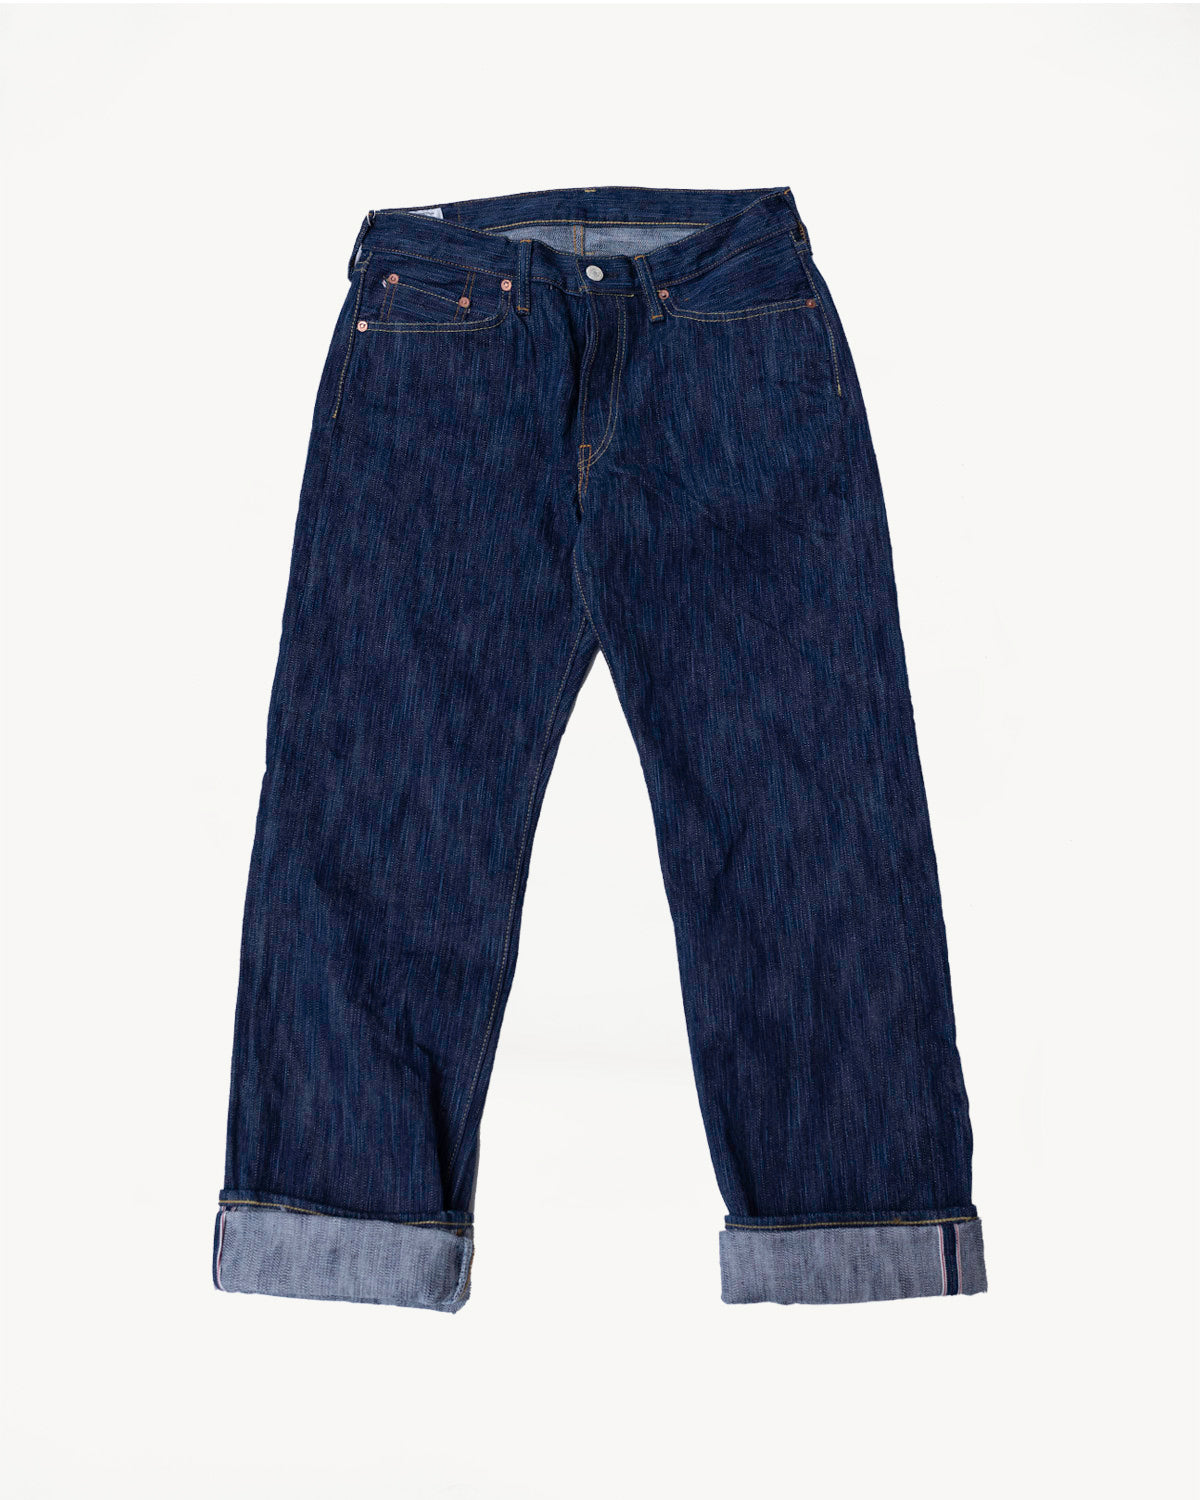 D1866S - 15oz Tokushima Selvedge Jeans Regular Straight - Natural Indi